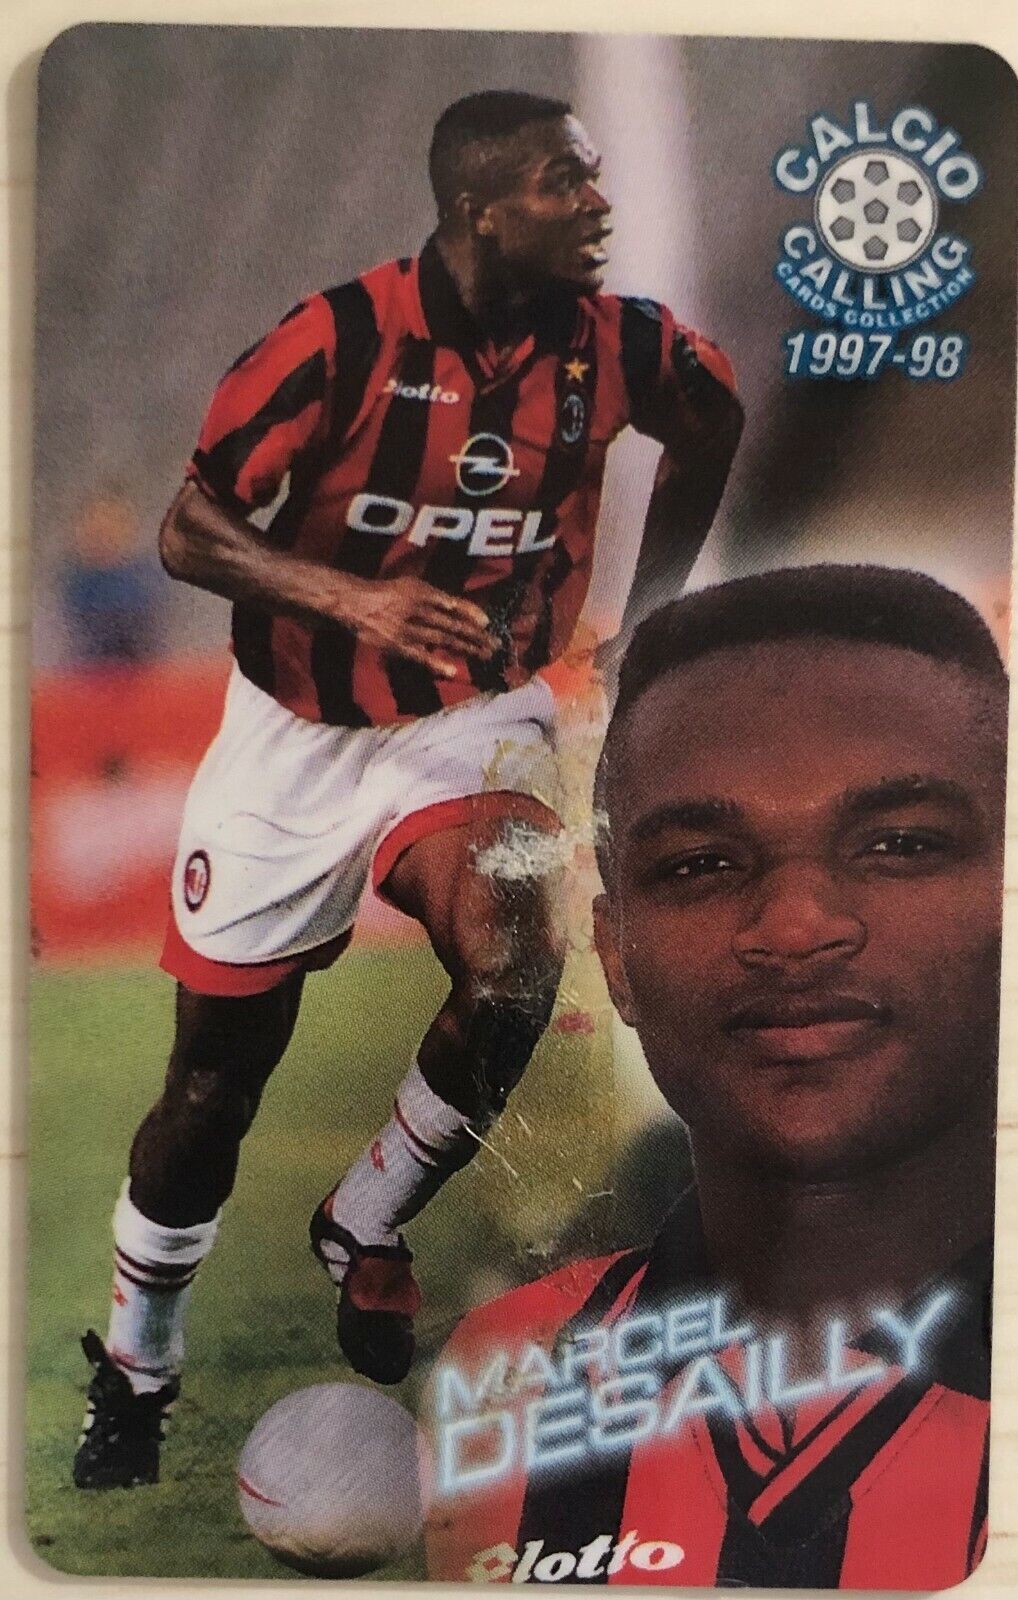 Panini calcio calling cards collection 1997-1998 Desailly INTROVABILE di Aa.vv., libro usato